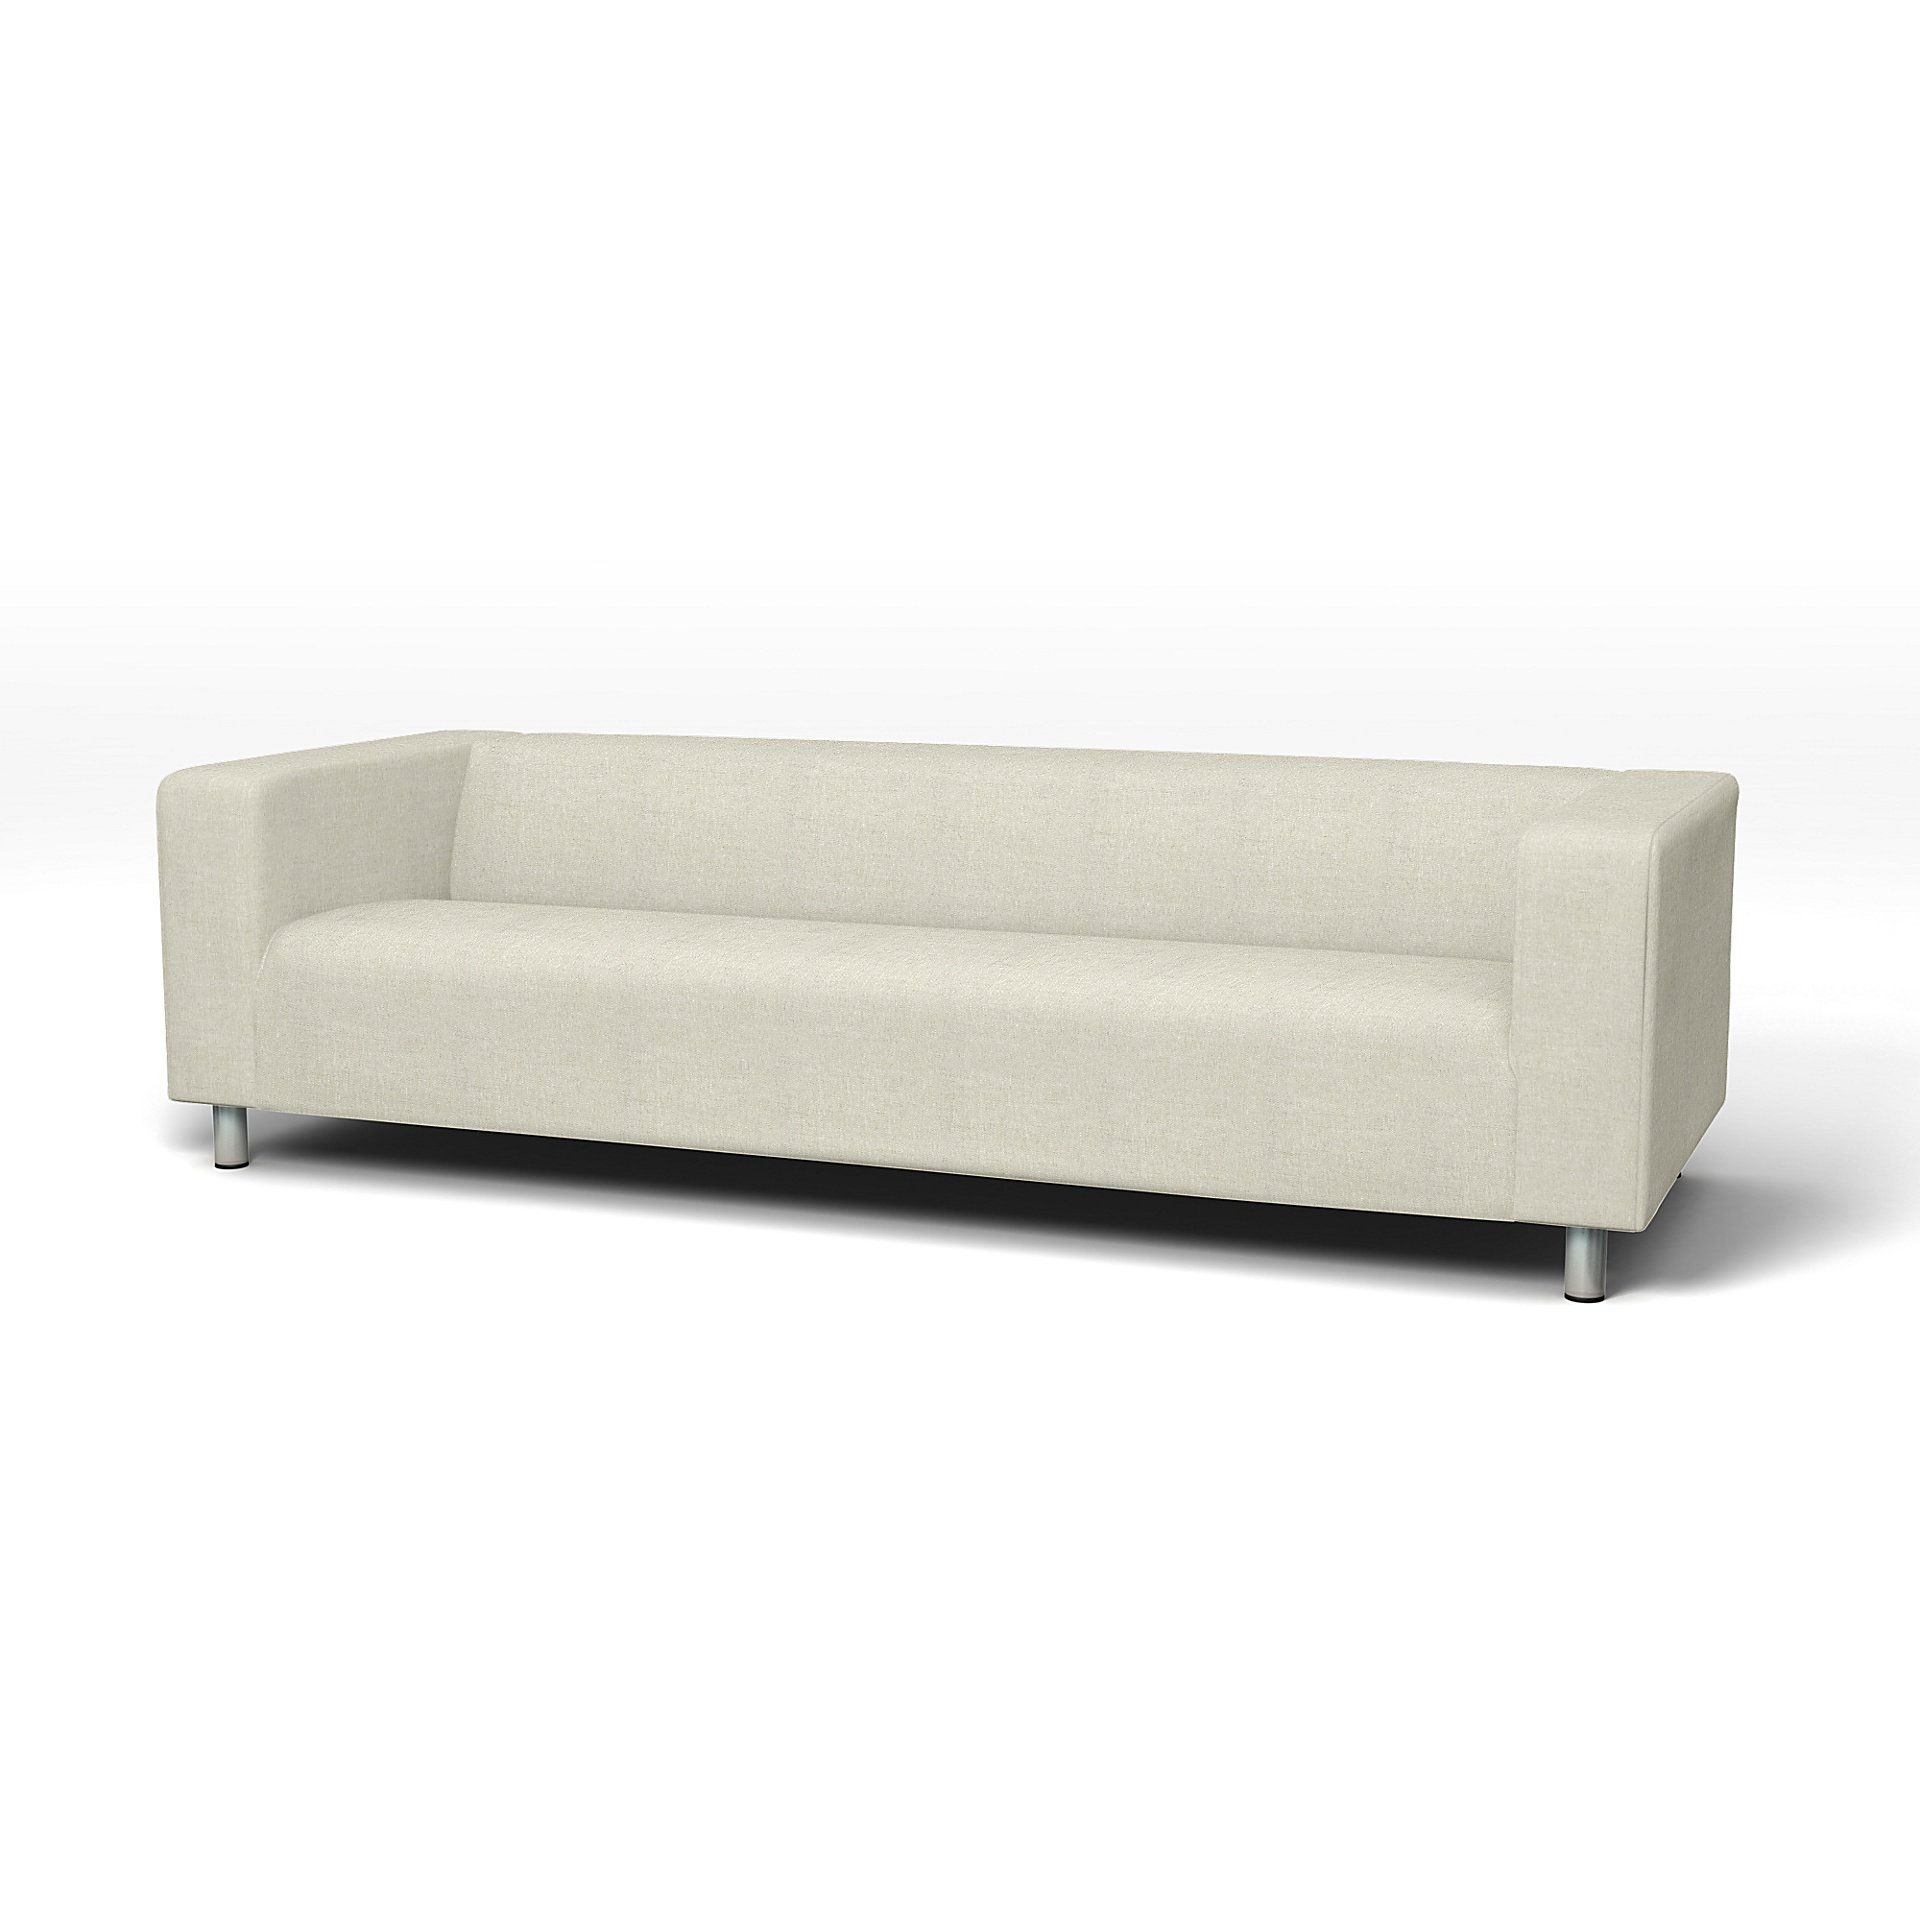 IKEA - Klippan 4 Seater Sofa Cover, Natural, Linen - Bemz